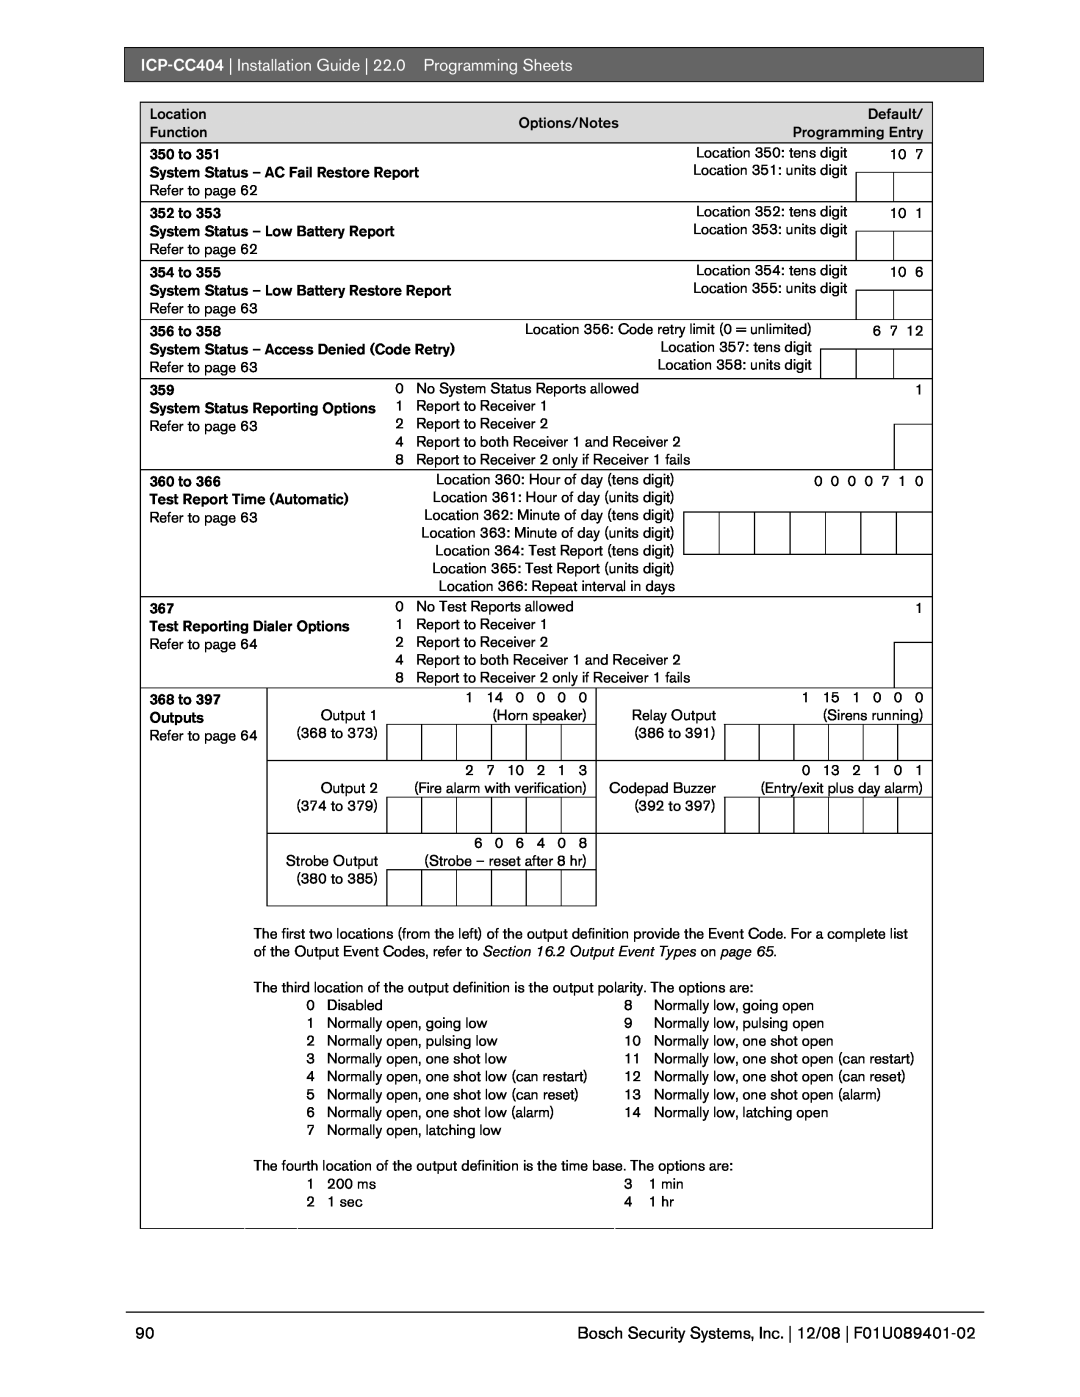 Bosch Appliances manual Programming Sheets, ICP-CC404| Installation Guide 